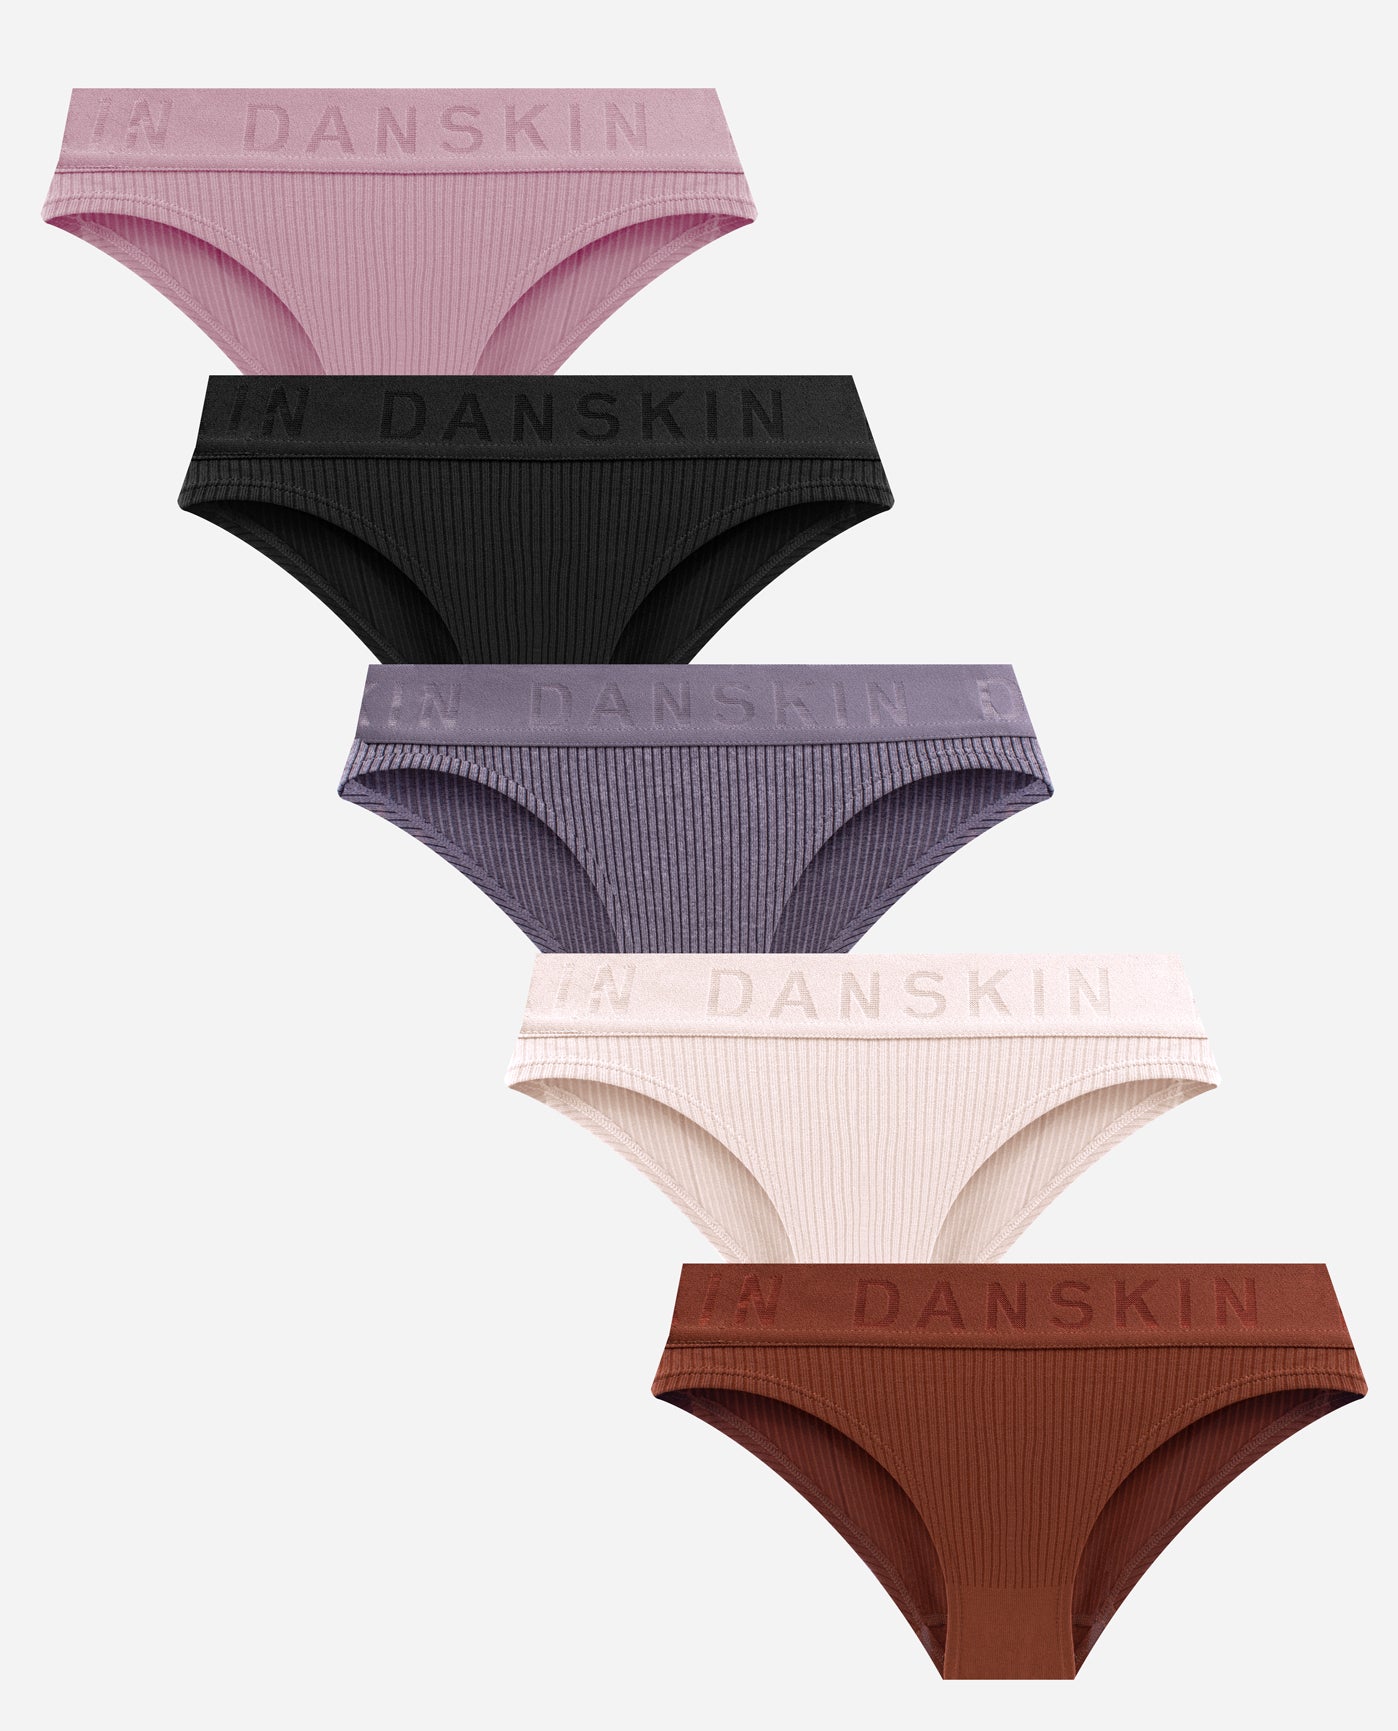 Danskin Recycled Microfiber Panties - 5-Pack, Thong - Save 50%